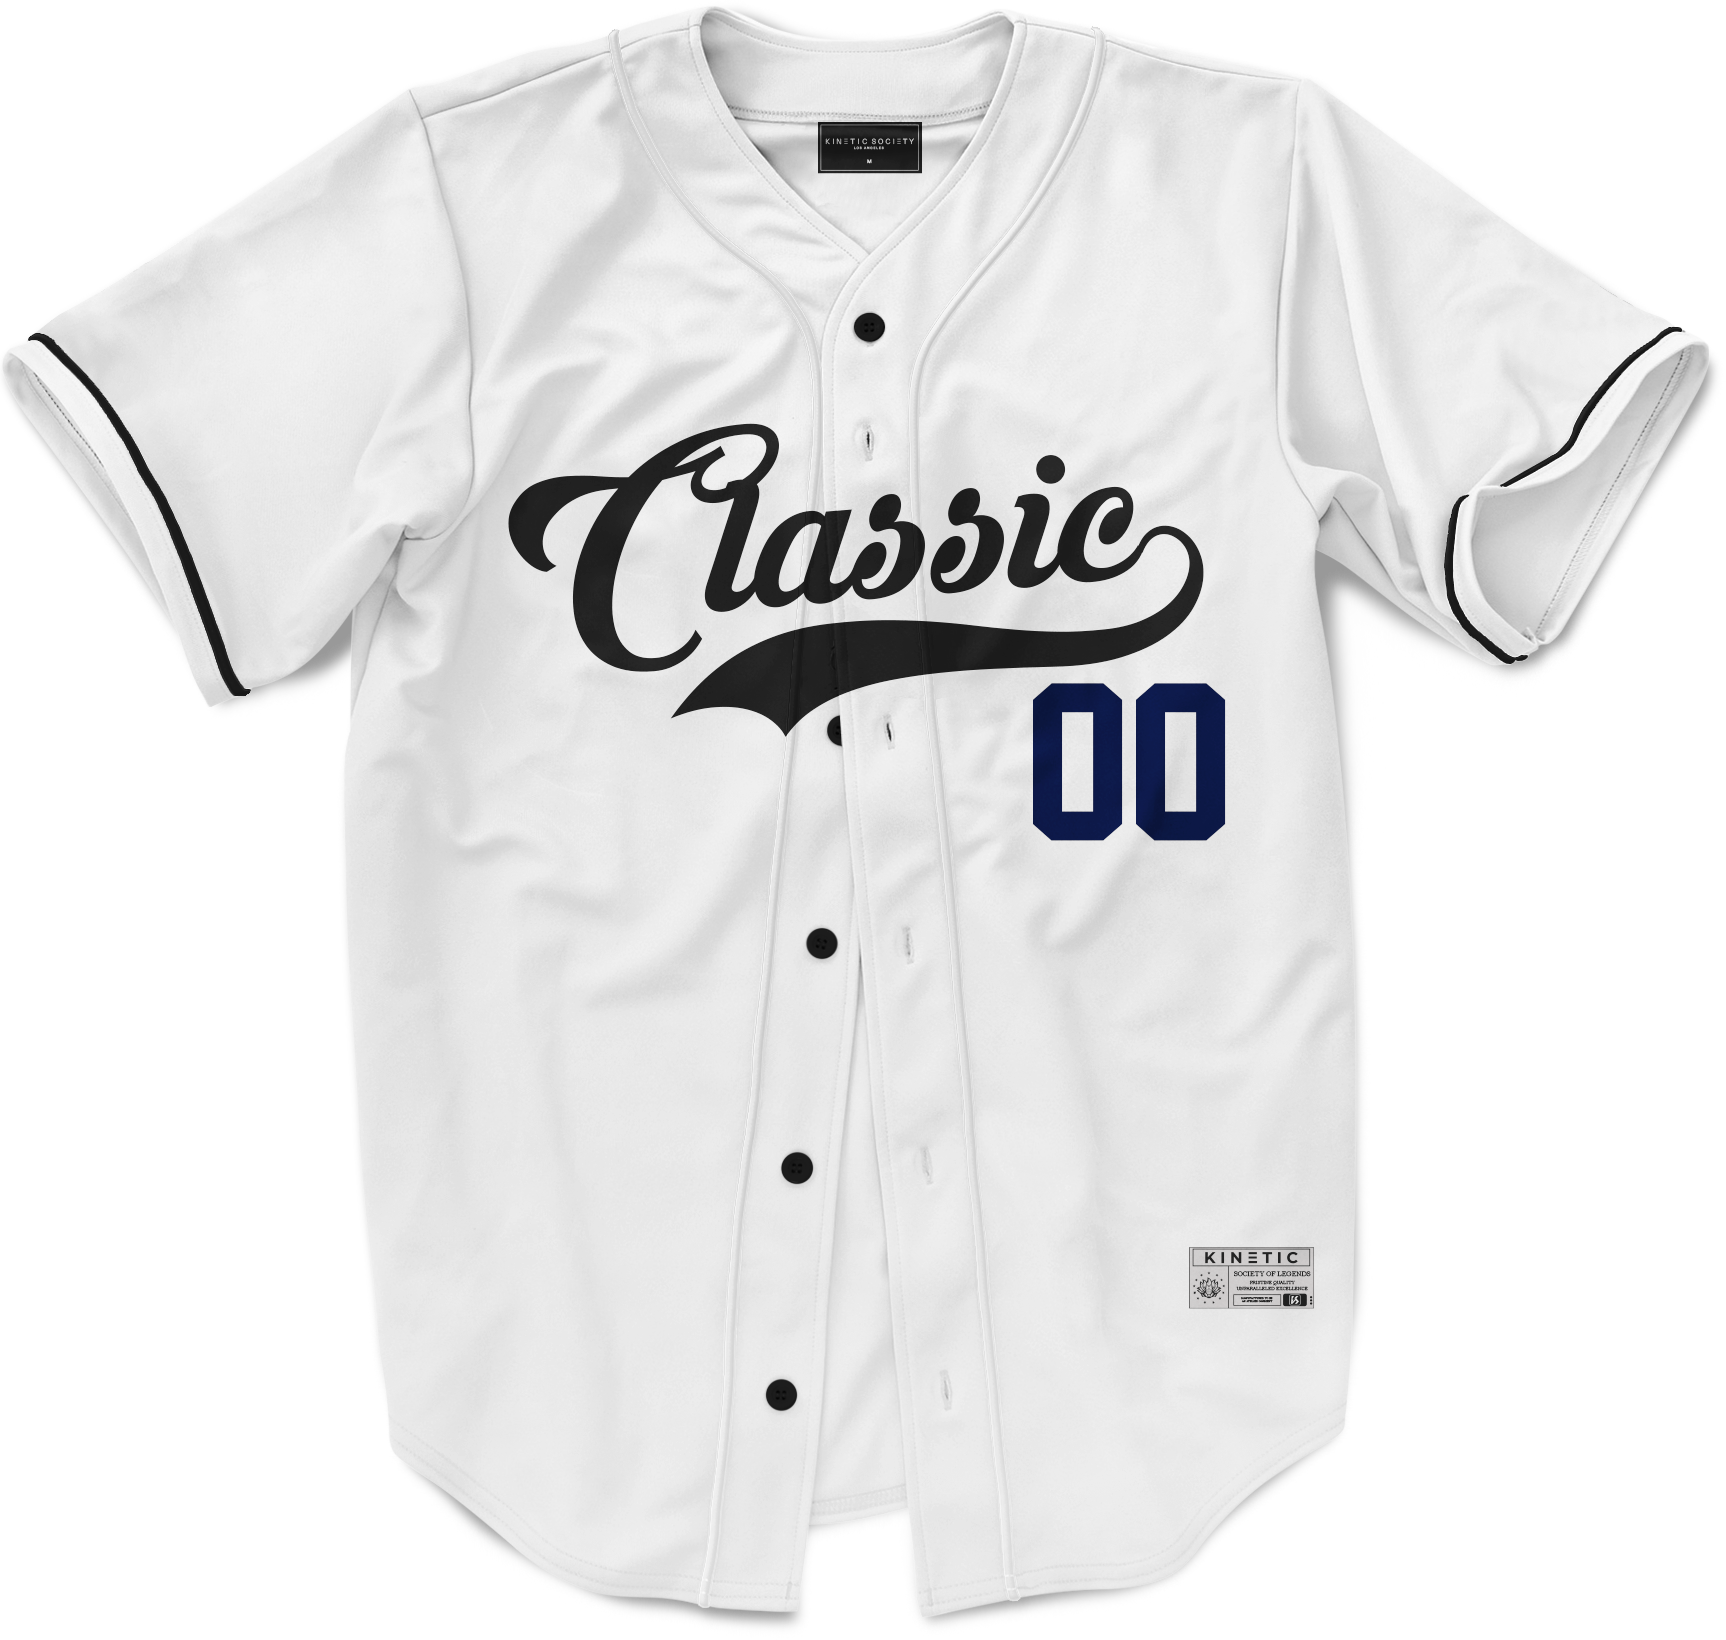 Kinetic ID - Classic Ballpark Blue Baseball Jersey